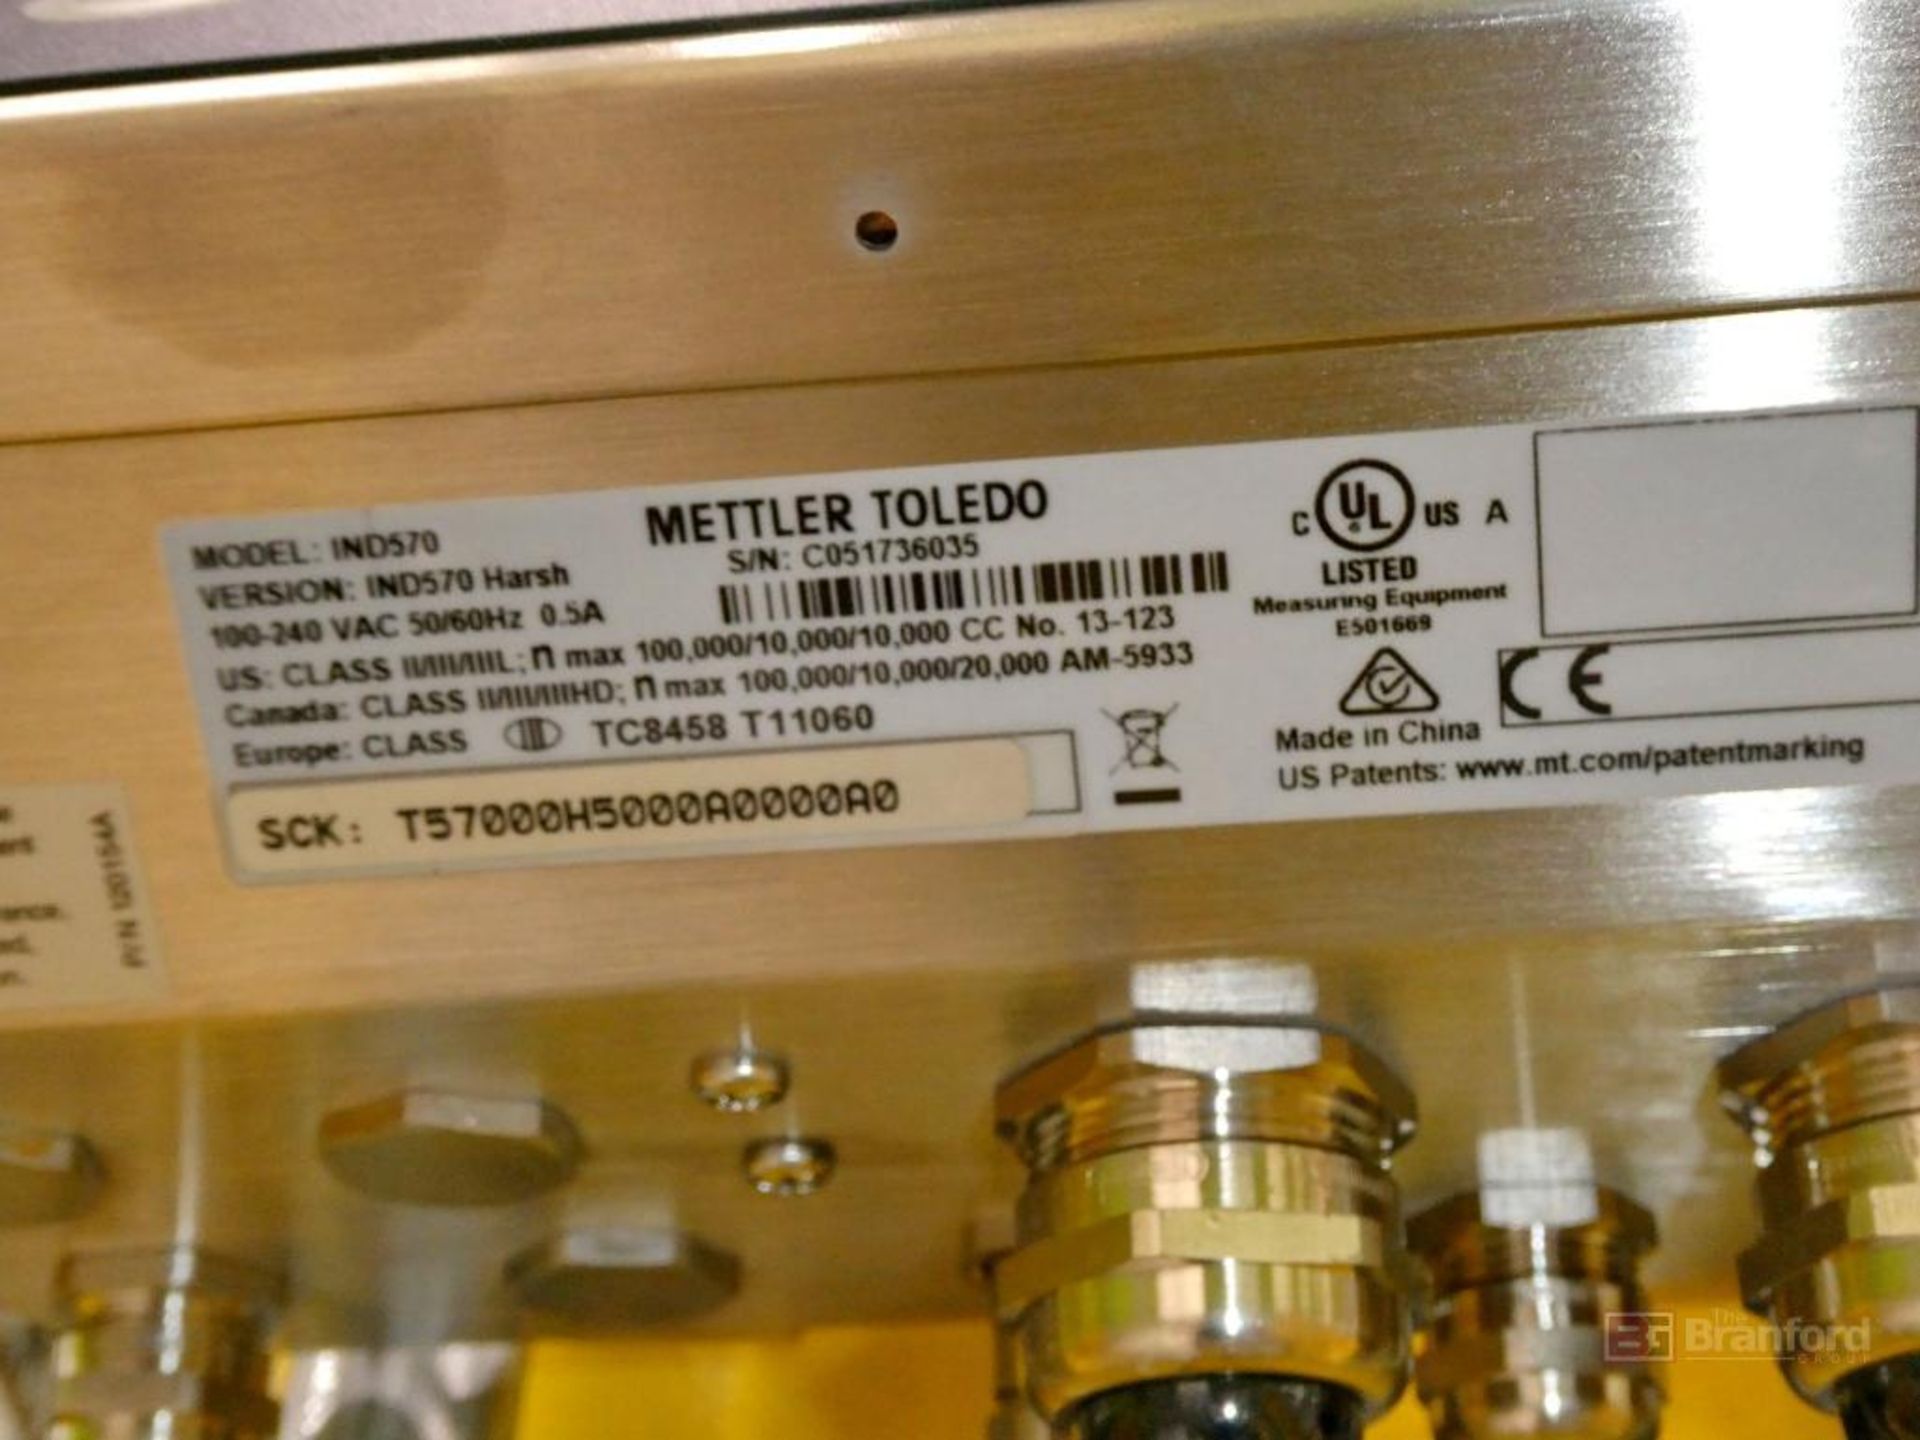 Mettler-Toledo Model IND570, Stainless Steel Digital Weight Scale - Image 4 of 6